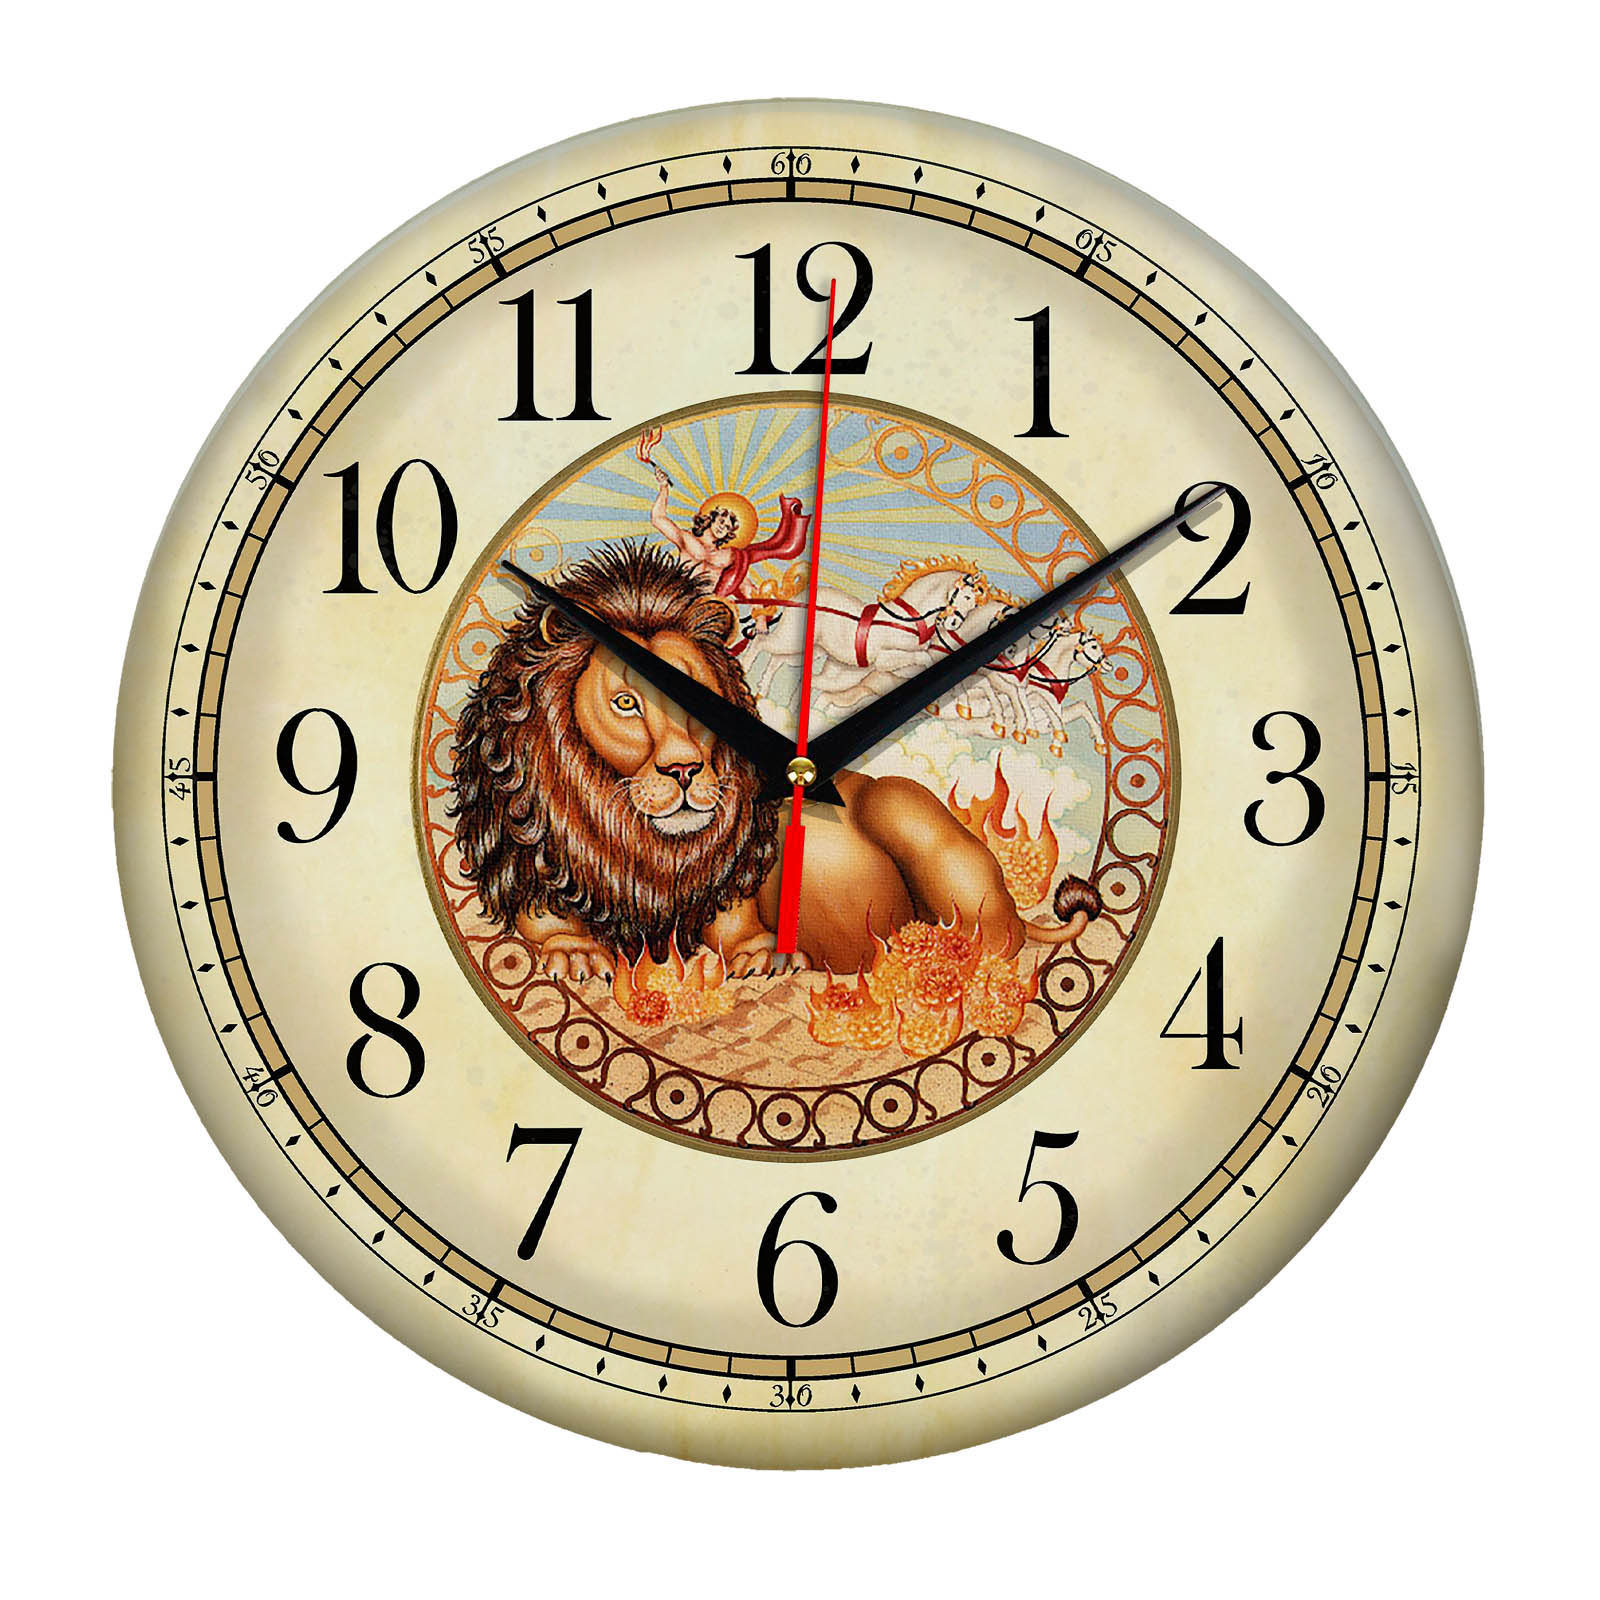 Часы zodiac. Часы сувенир. Часы настенные сувенирные. Часы со знаками зодиака.